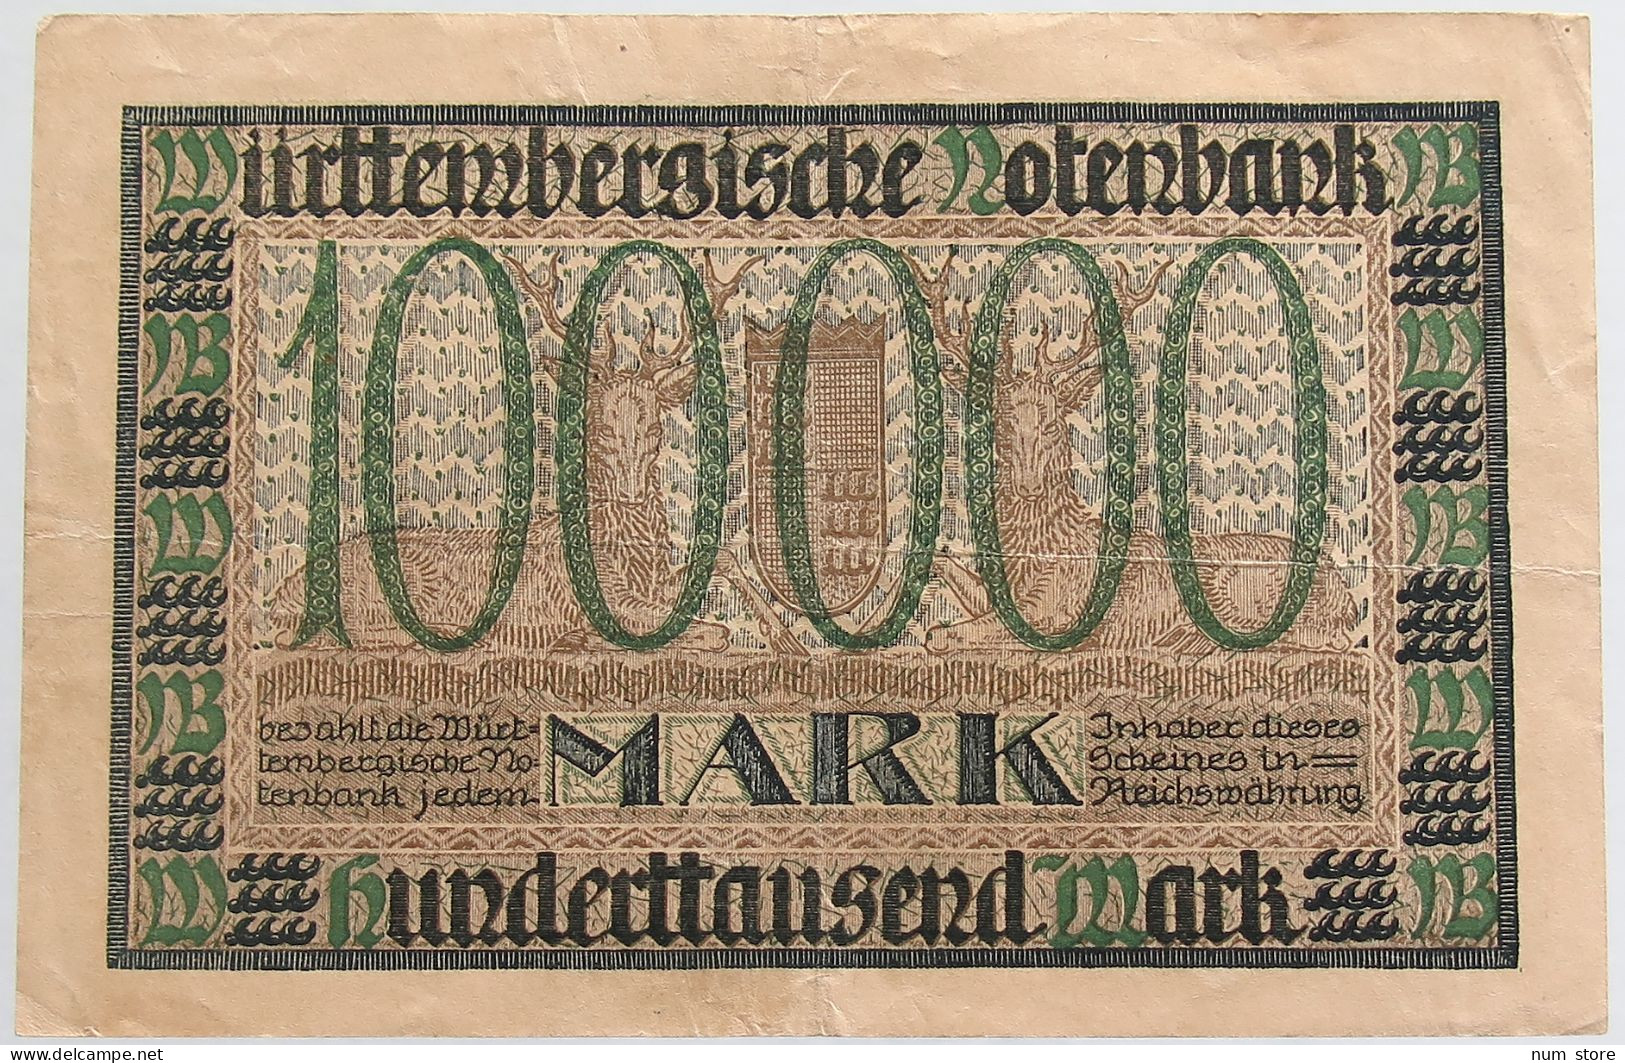 GERMANY 100000 MARK 1923 WURTTEMBERG #alb012 0021 - 100.000 Mark